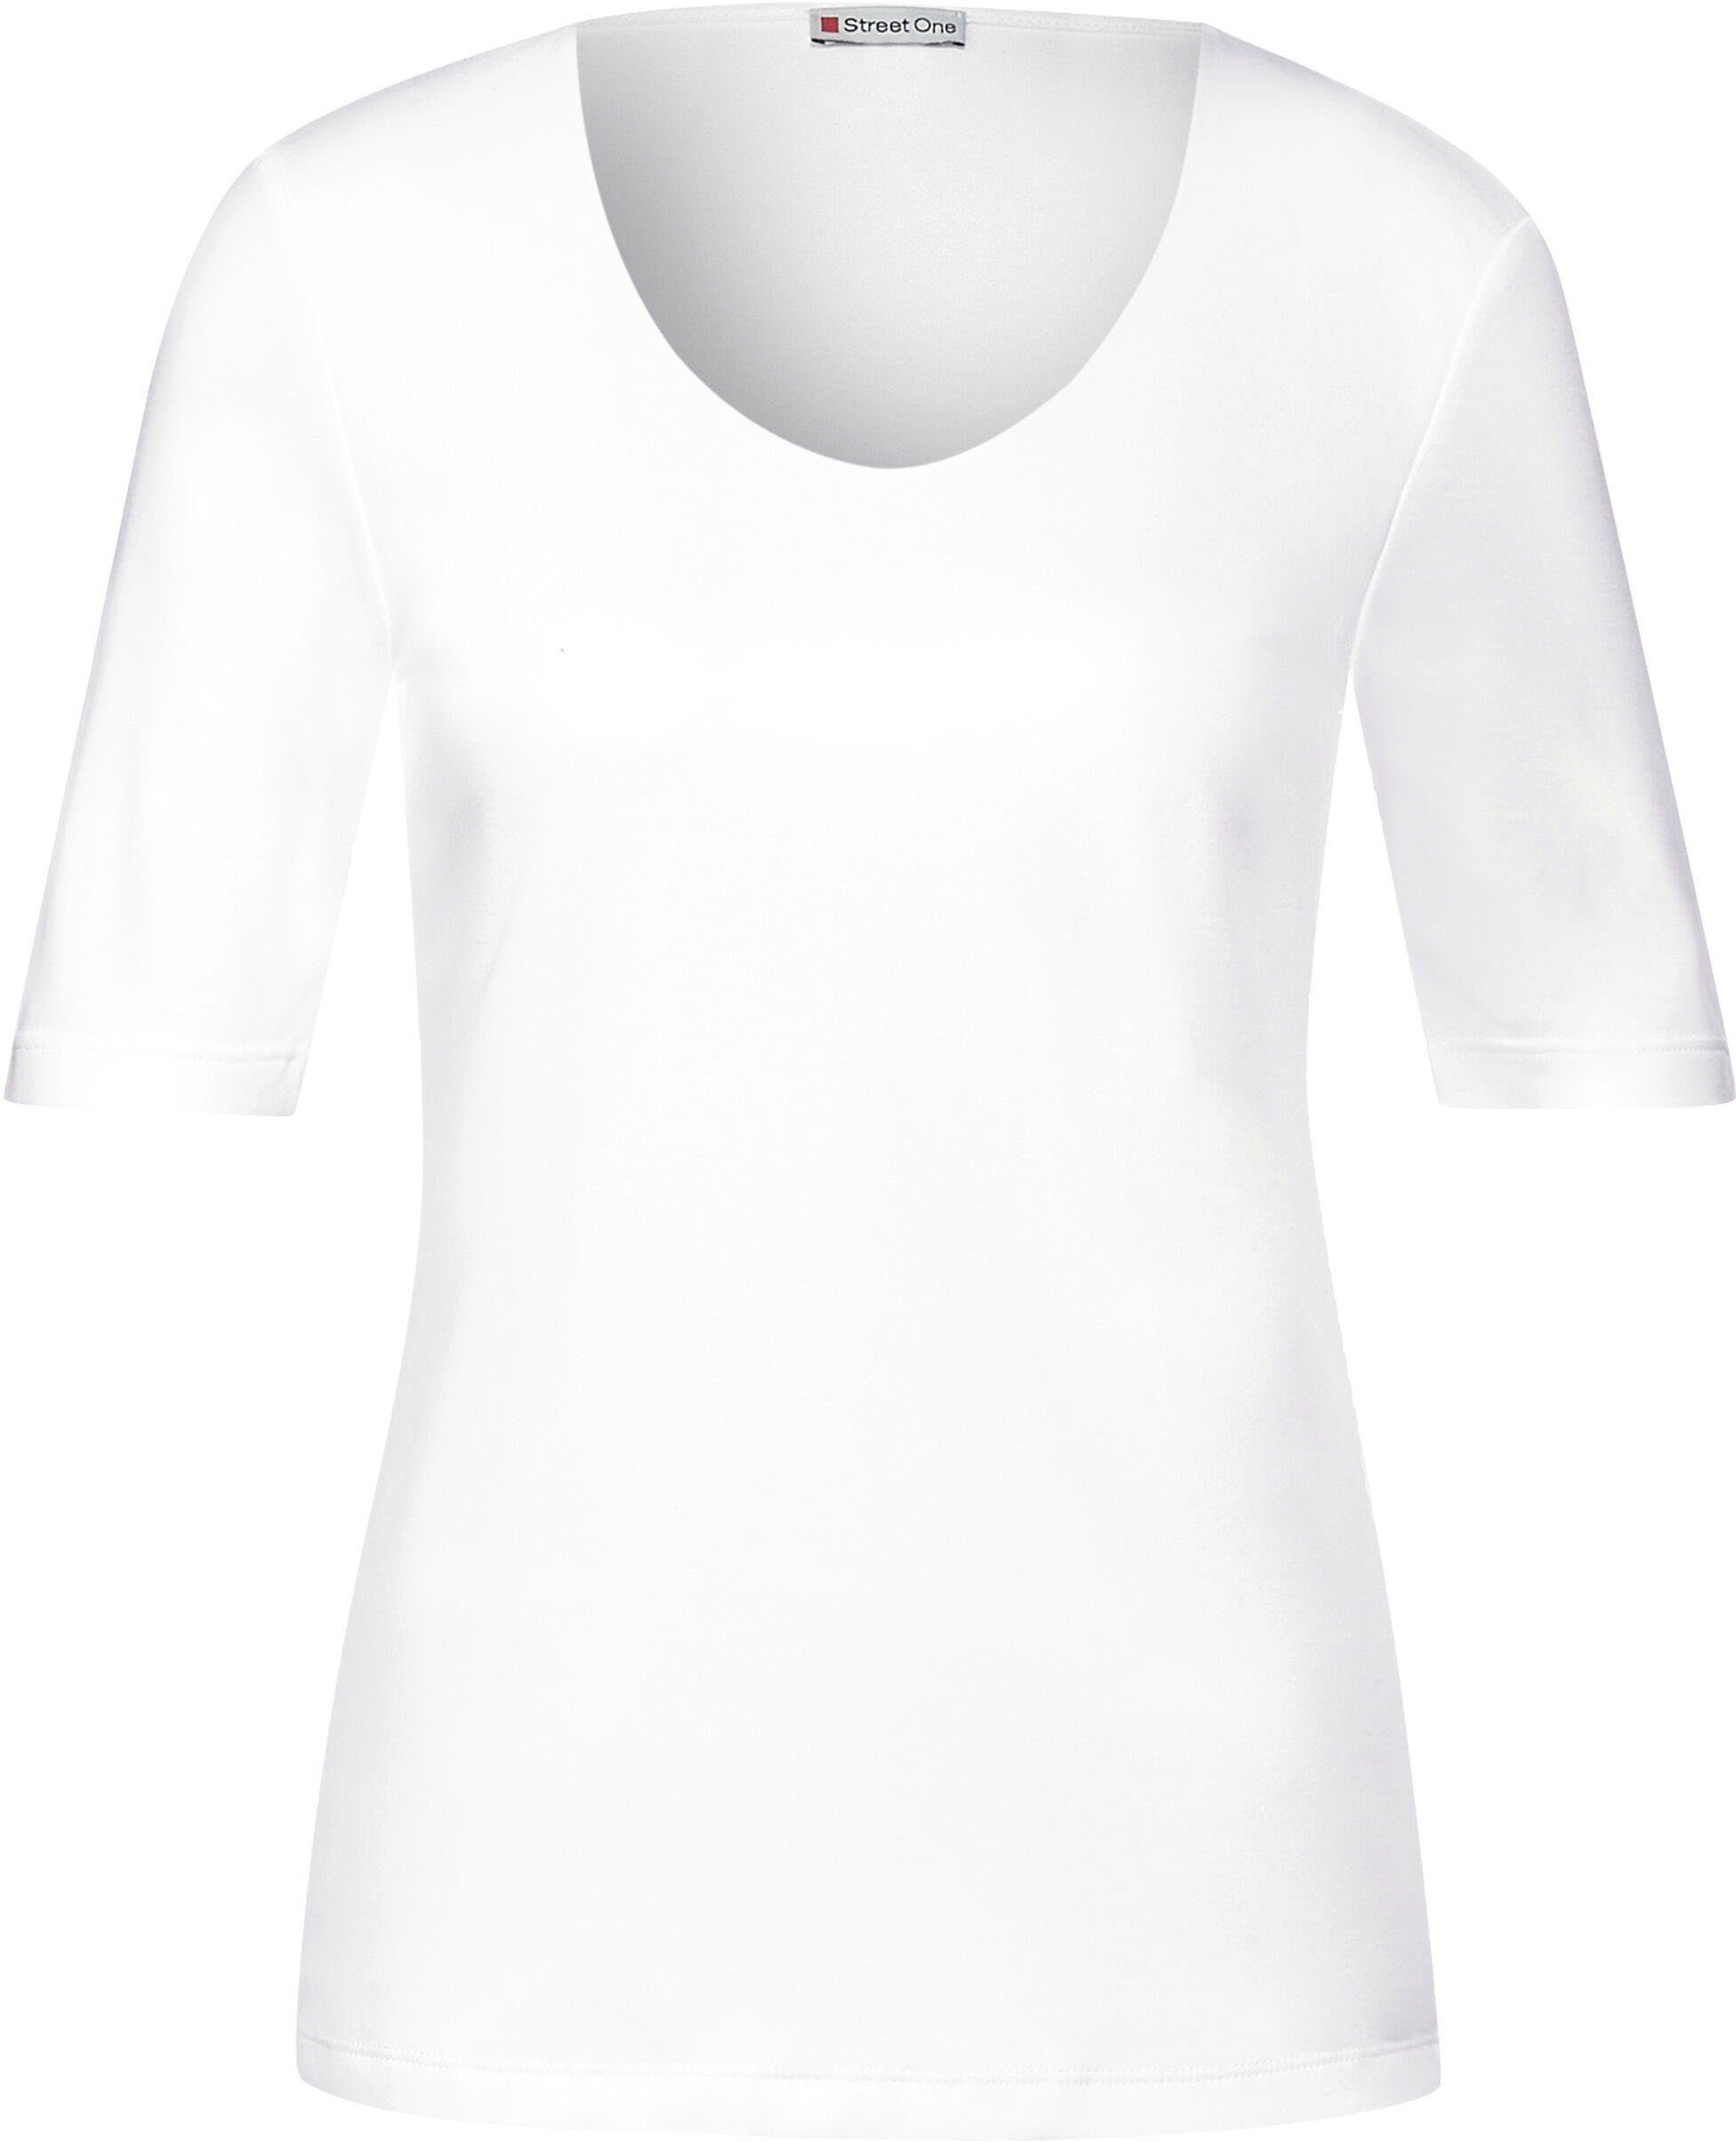 STREET ONE Basic T-Shirt Style White im